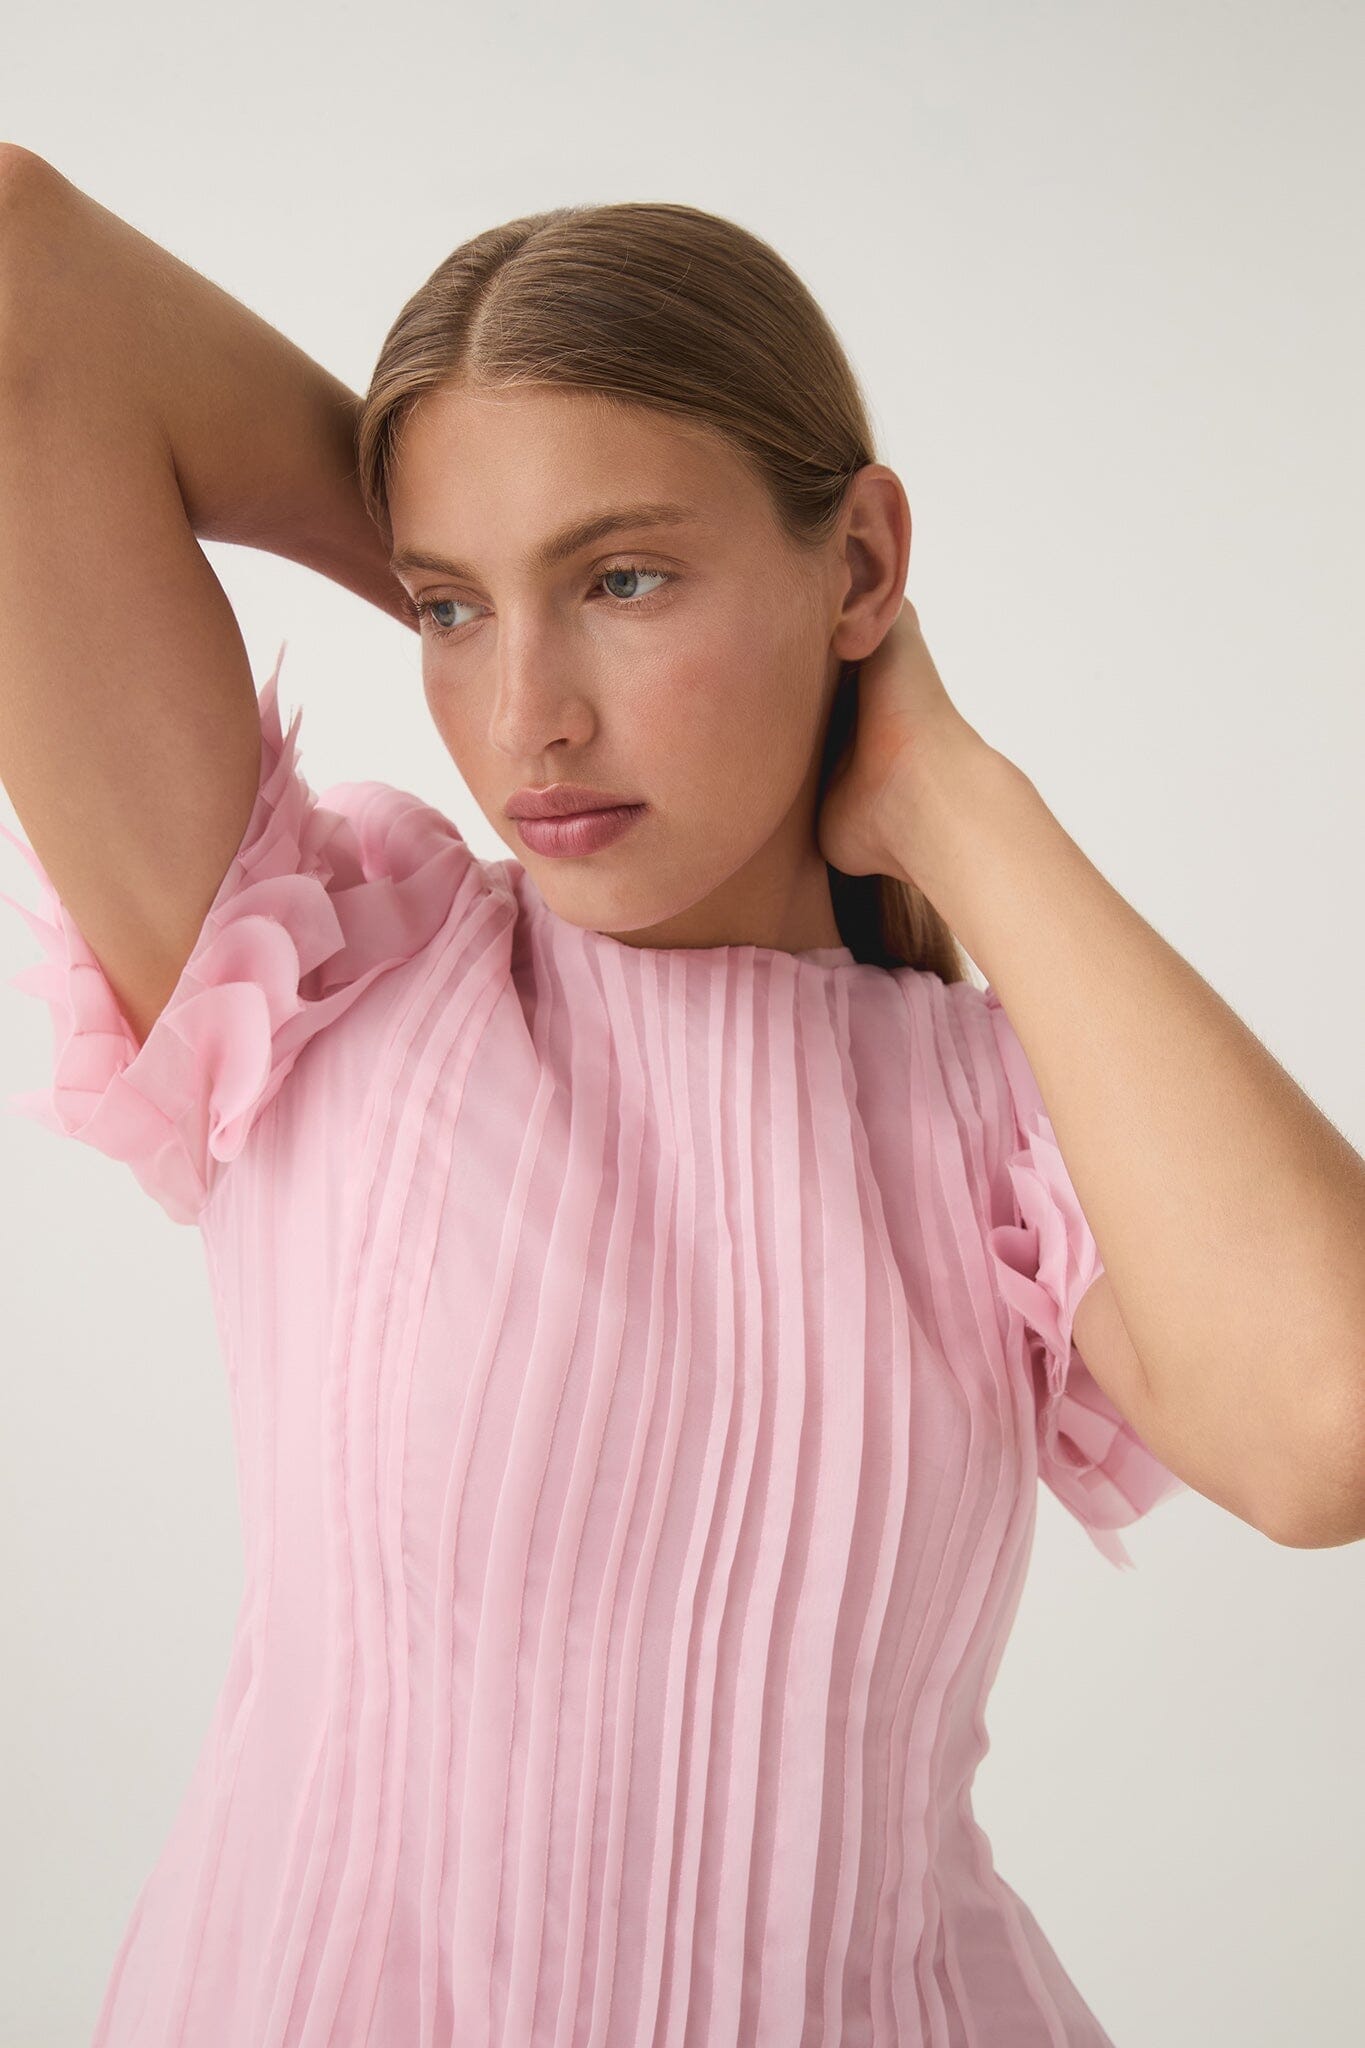 Nova Pleated Midi Dress - Pink Clothing Aje 